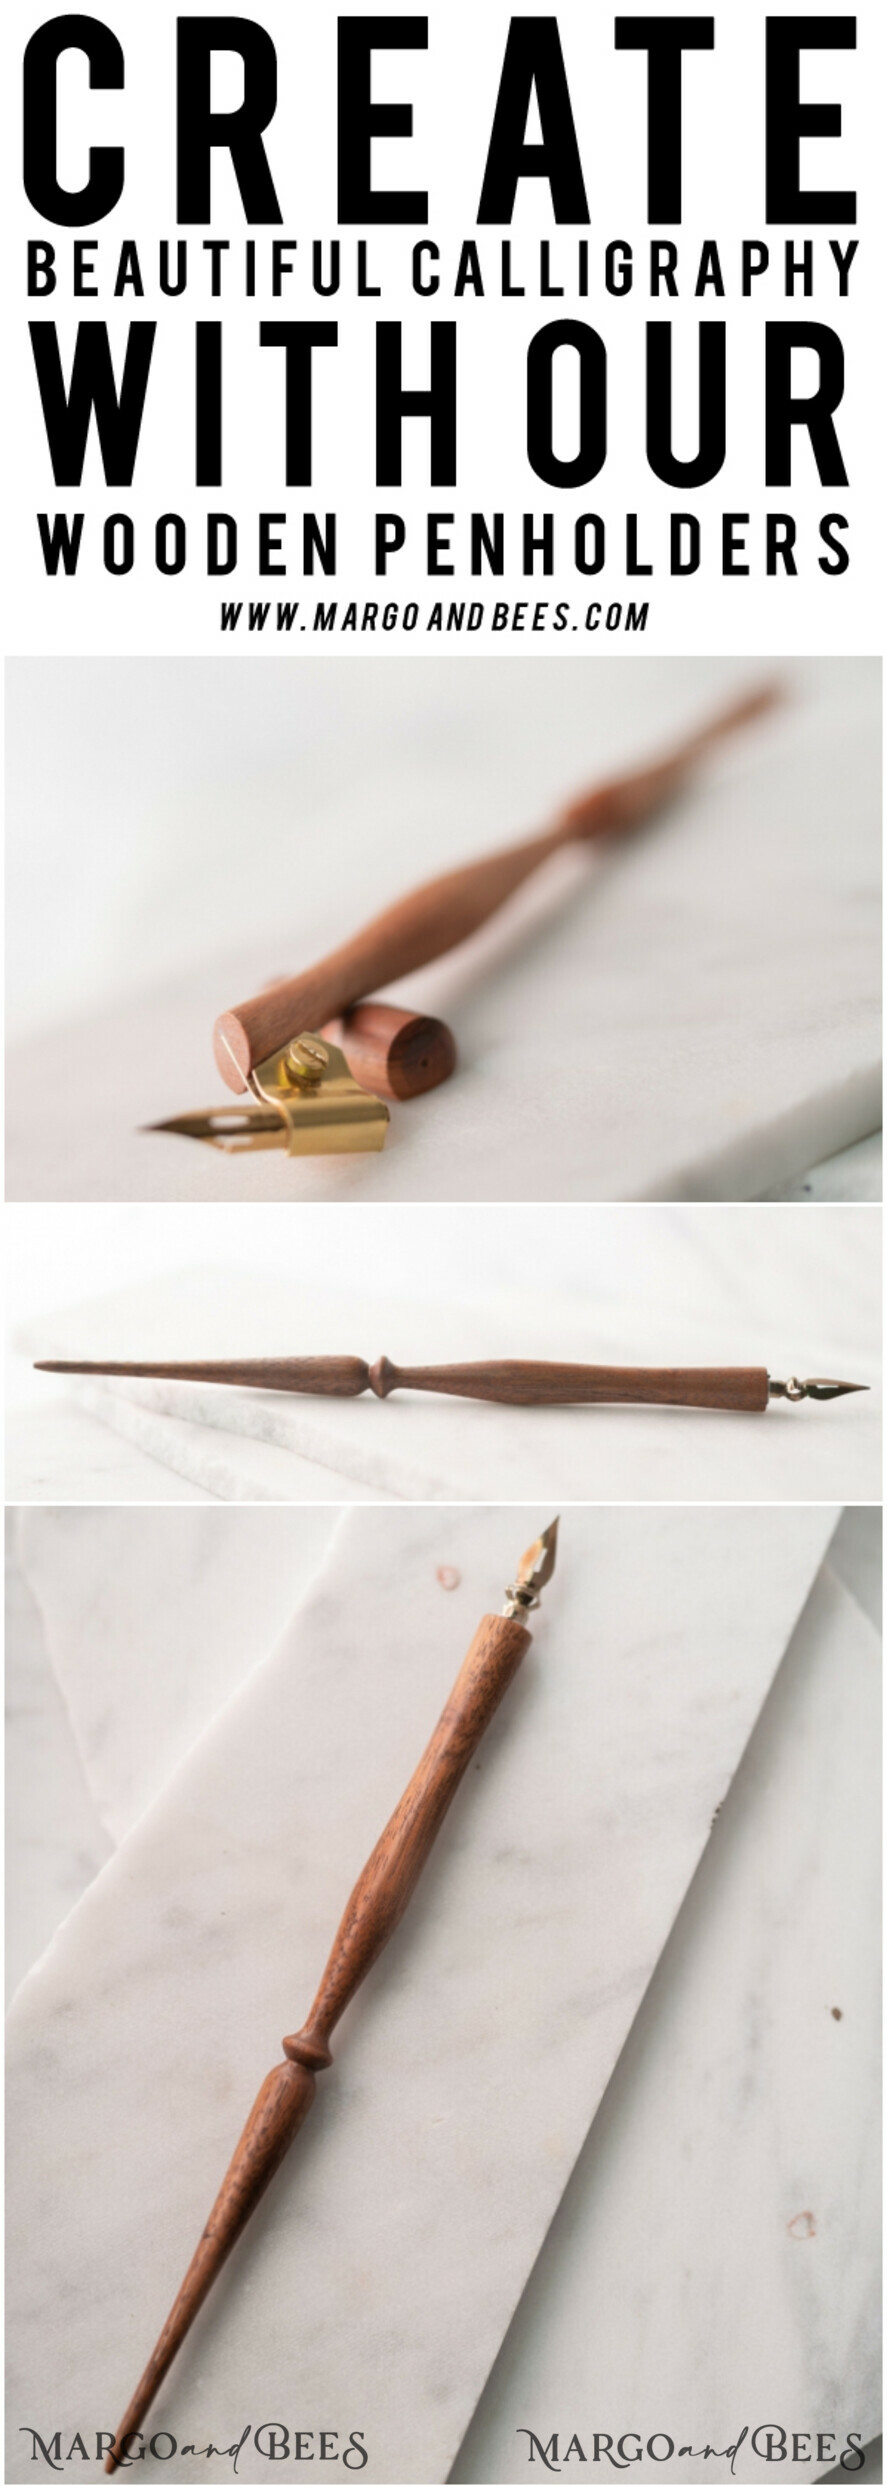 Black Oblique Pen Holder, Nib Holder, Calligraphy Pen Writing